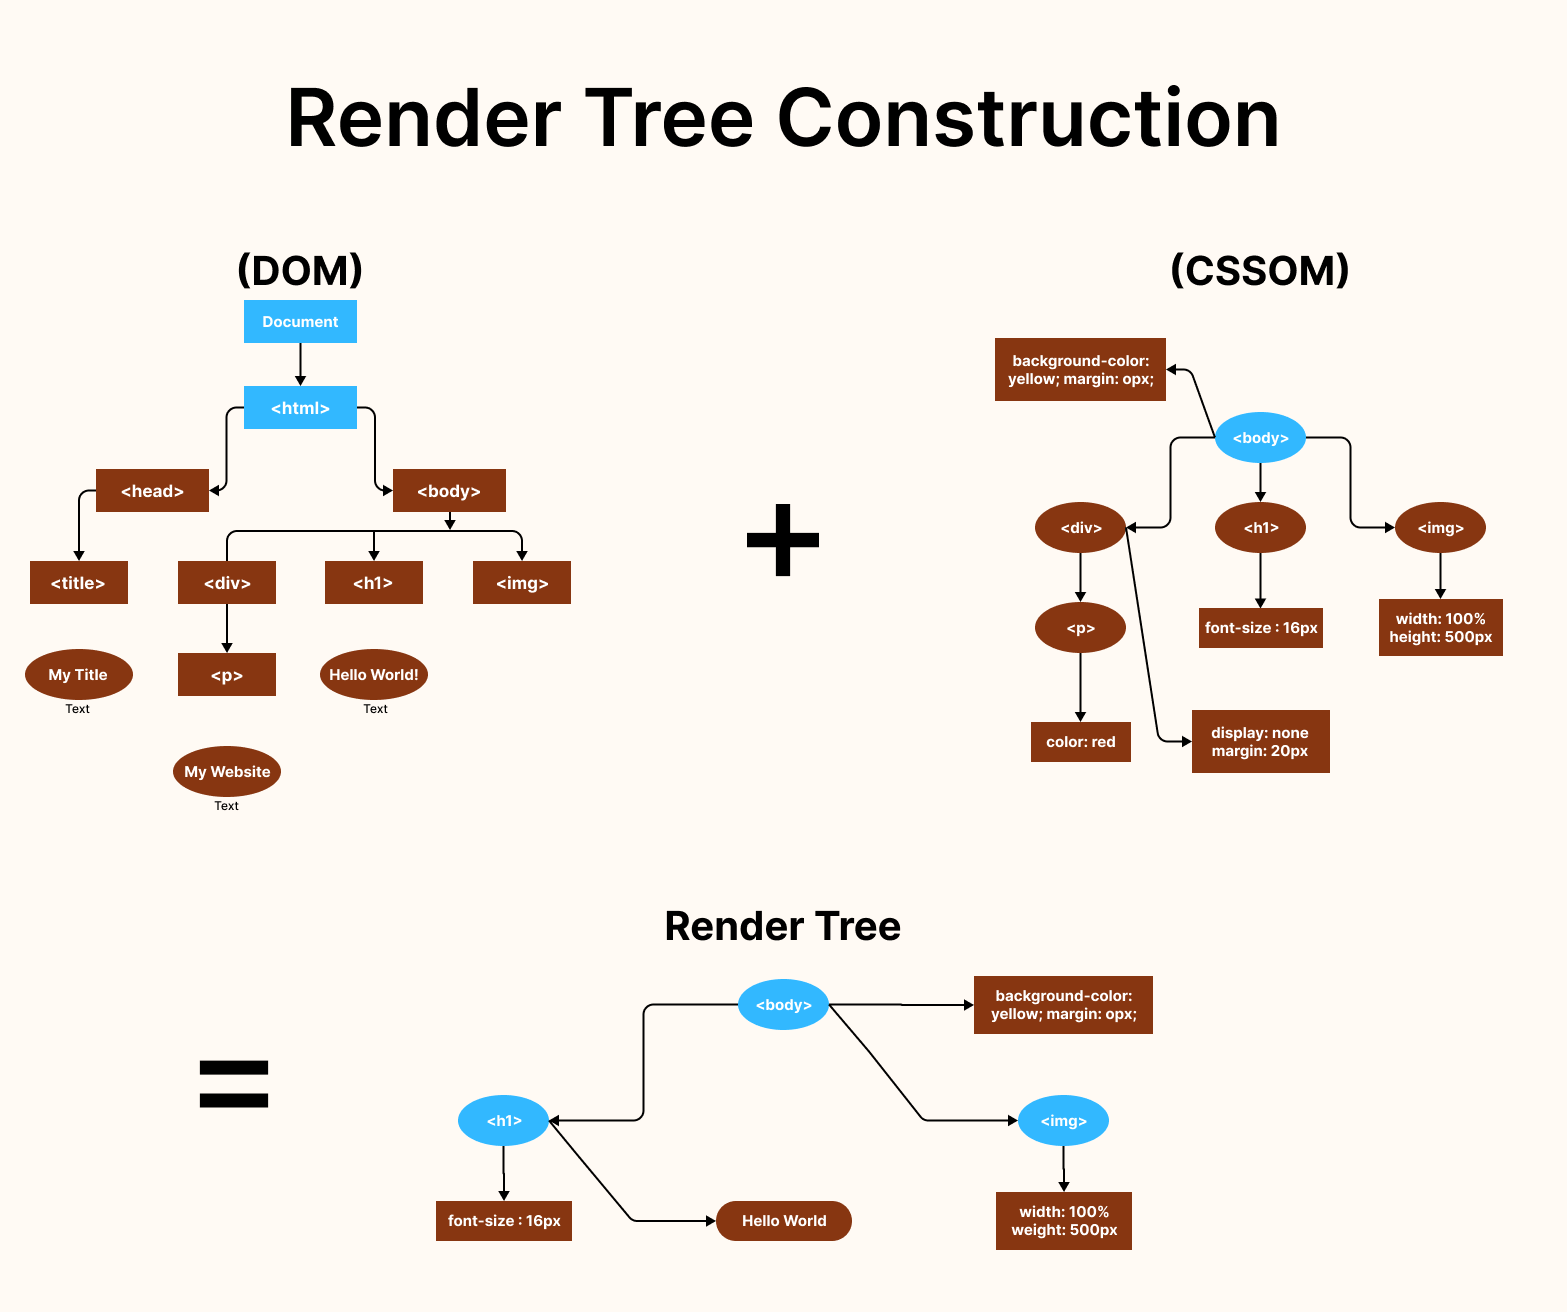 Render tree construction